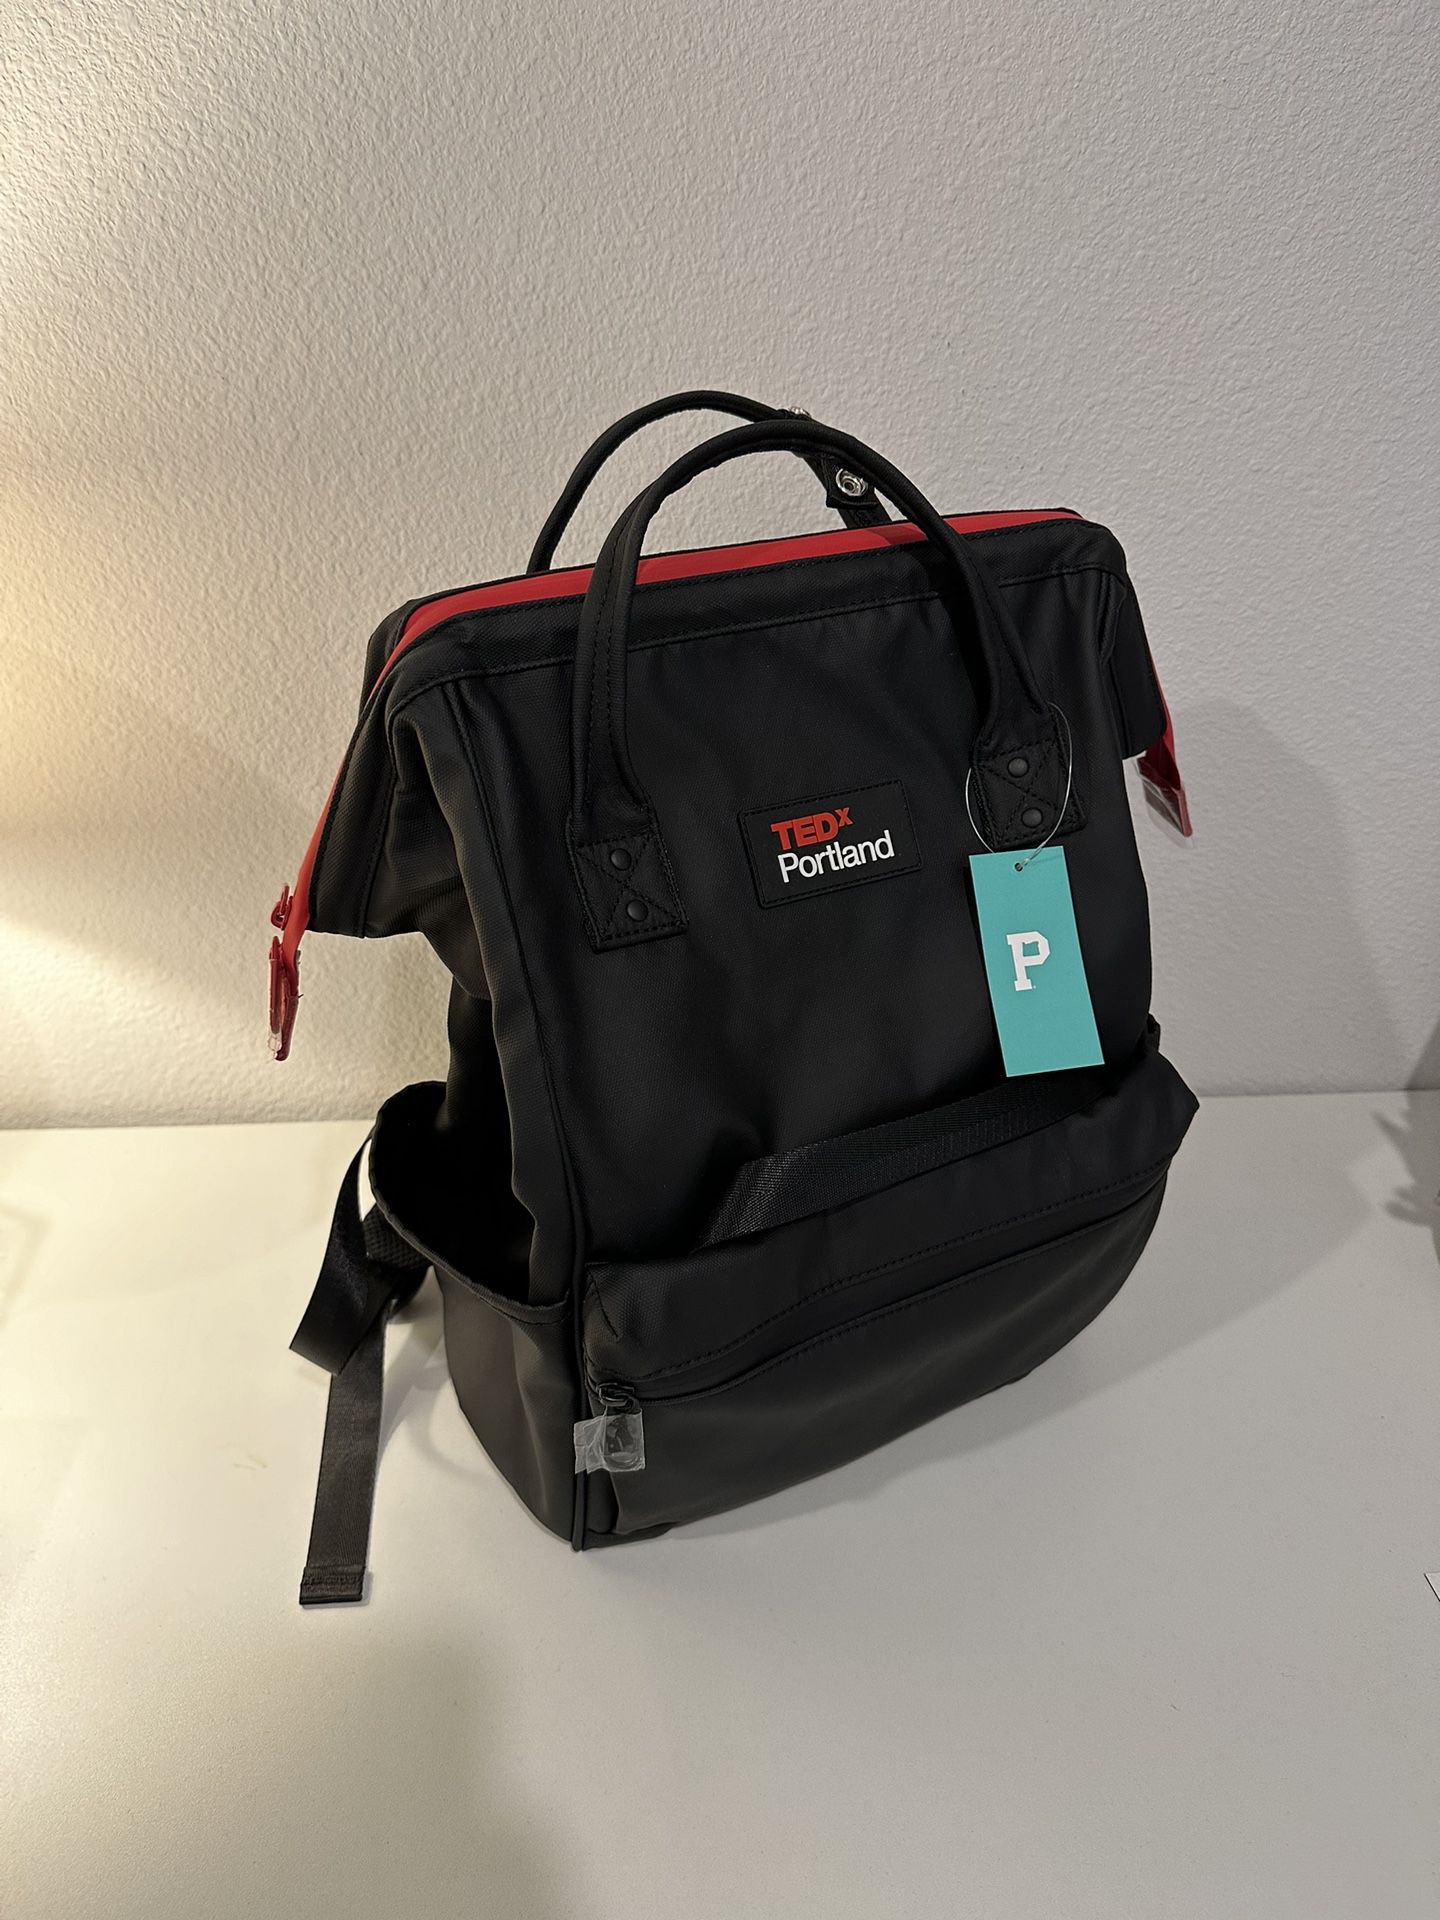 TedX / Portland Gear Backpack - Brand New W/ Tags